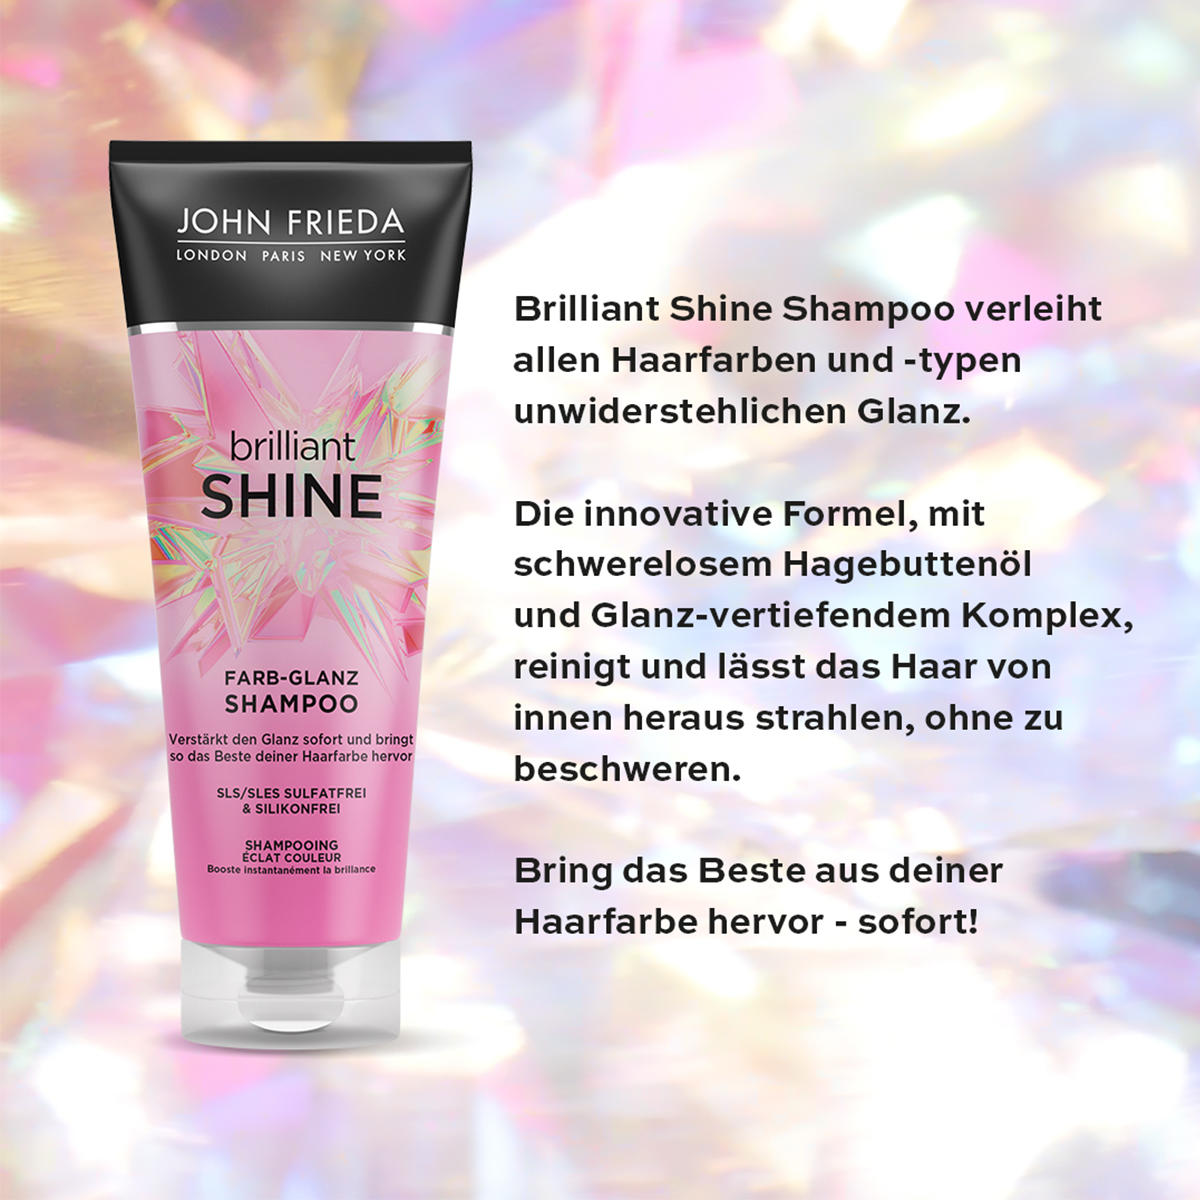 JOHN FRIEDA Brilliant Shine Farb-Glanz Shampoo  - 3